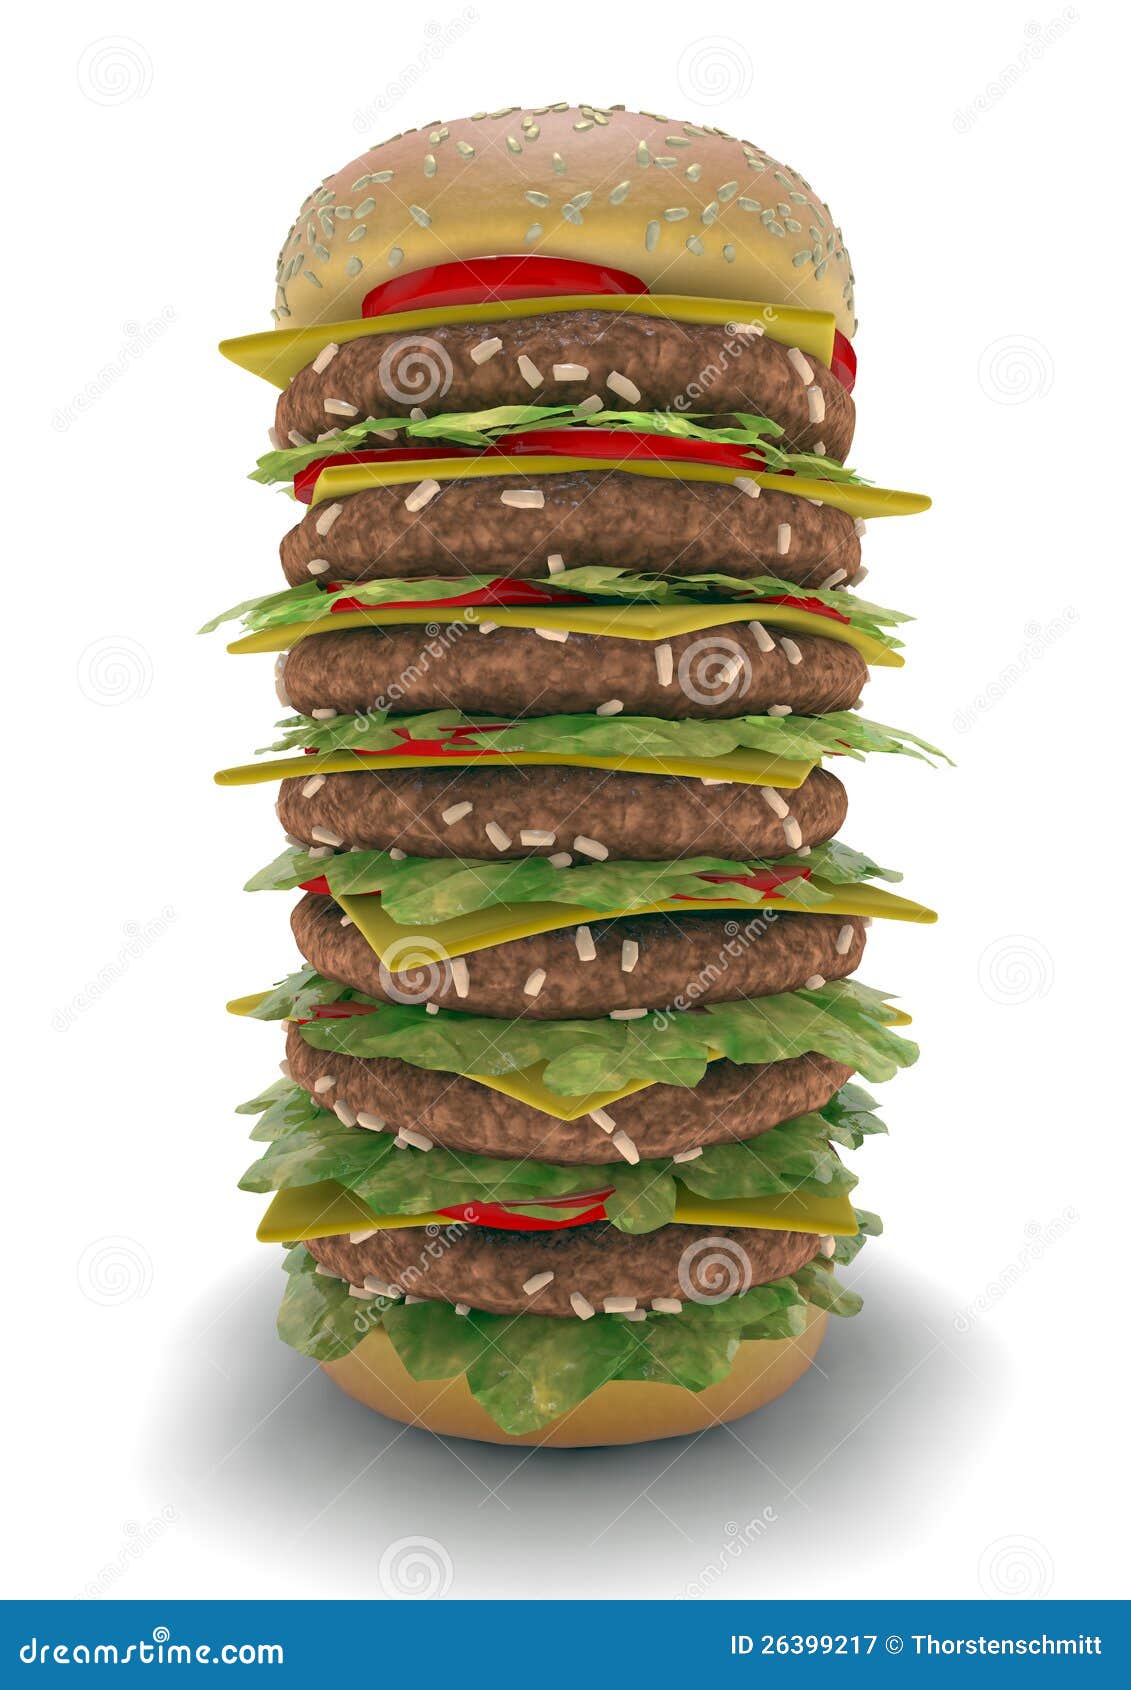 Hamburger Meal XXL Royalty Free Stock Photography  Image: 26399217